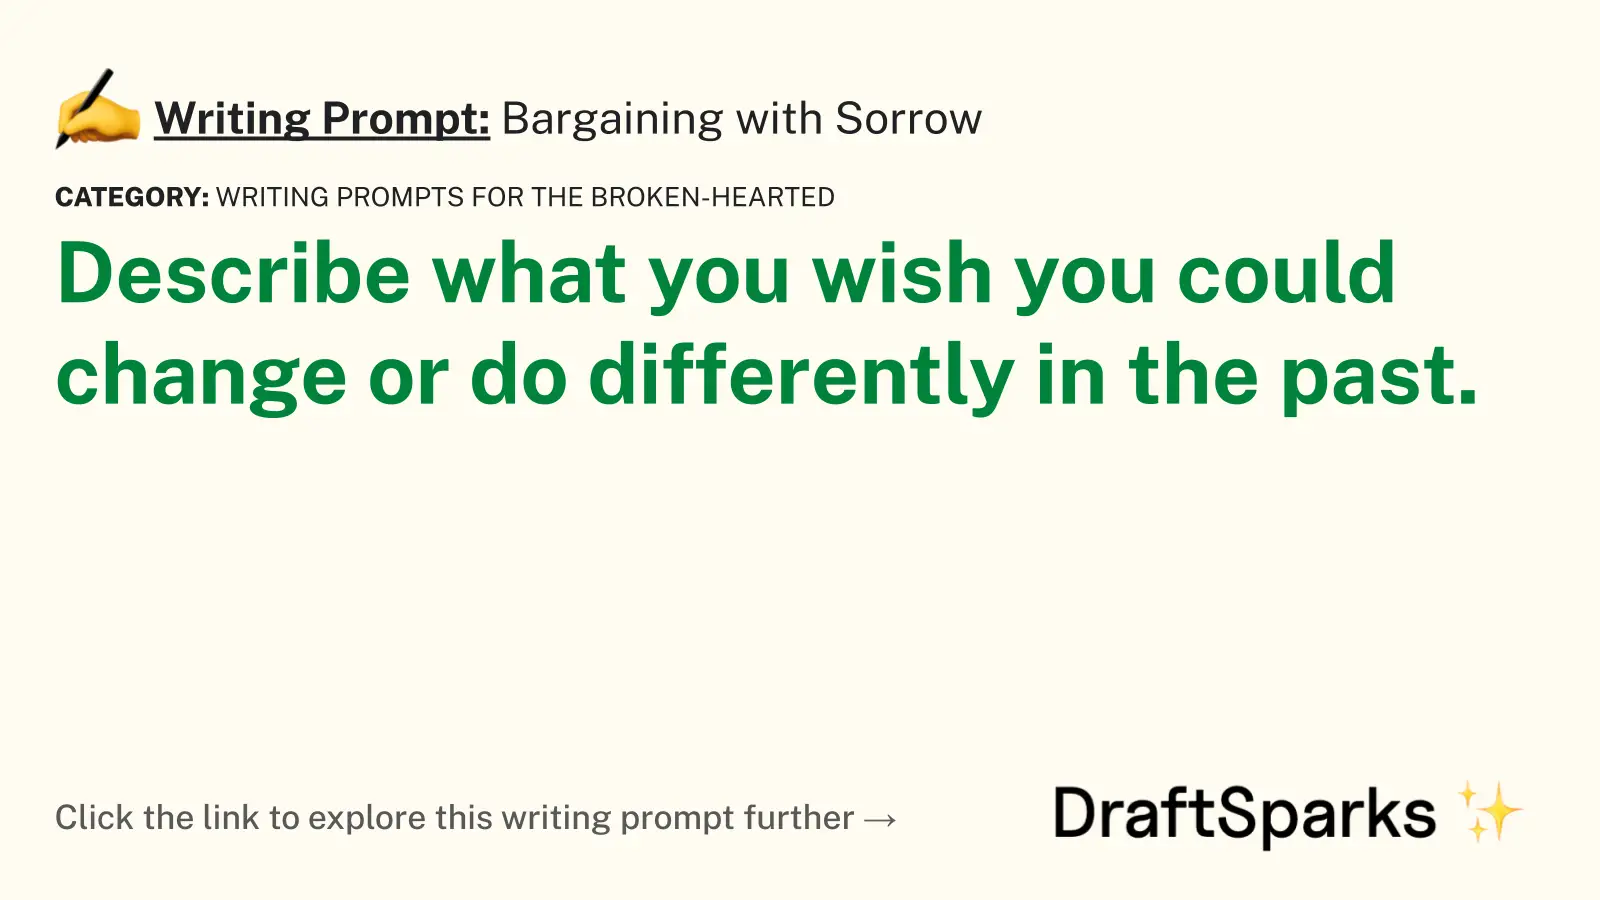 Bargaining with Sorrow